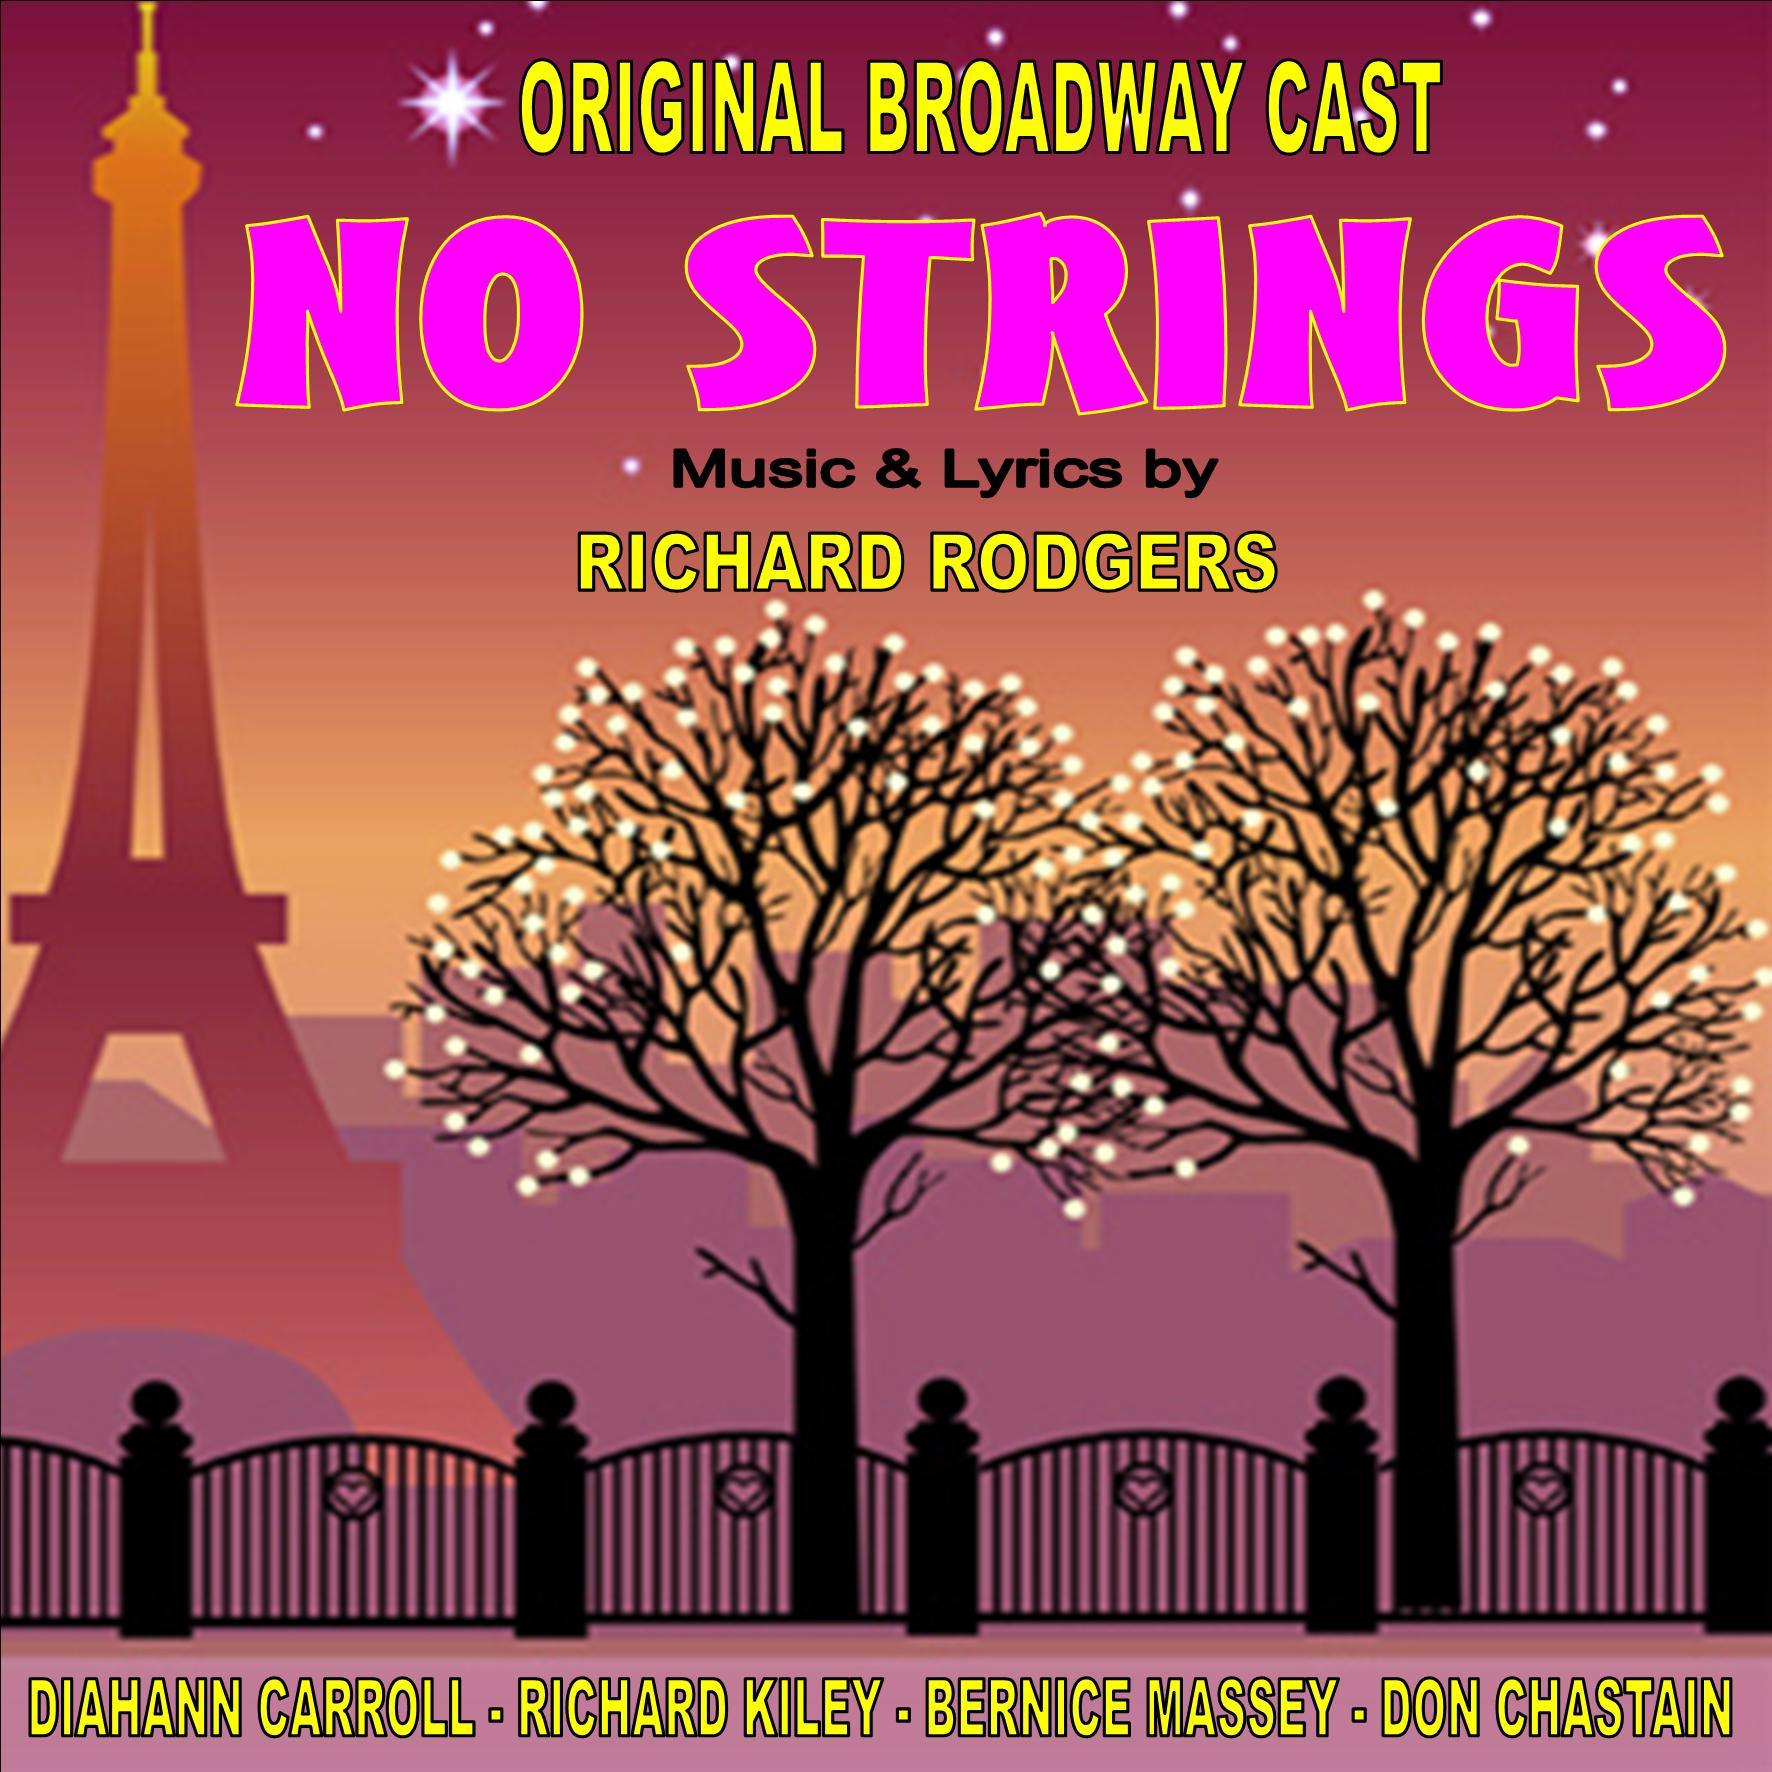 No Strings: Original Broadway Cast with Diahann Carroll and Richard Kiley